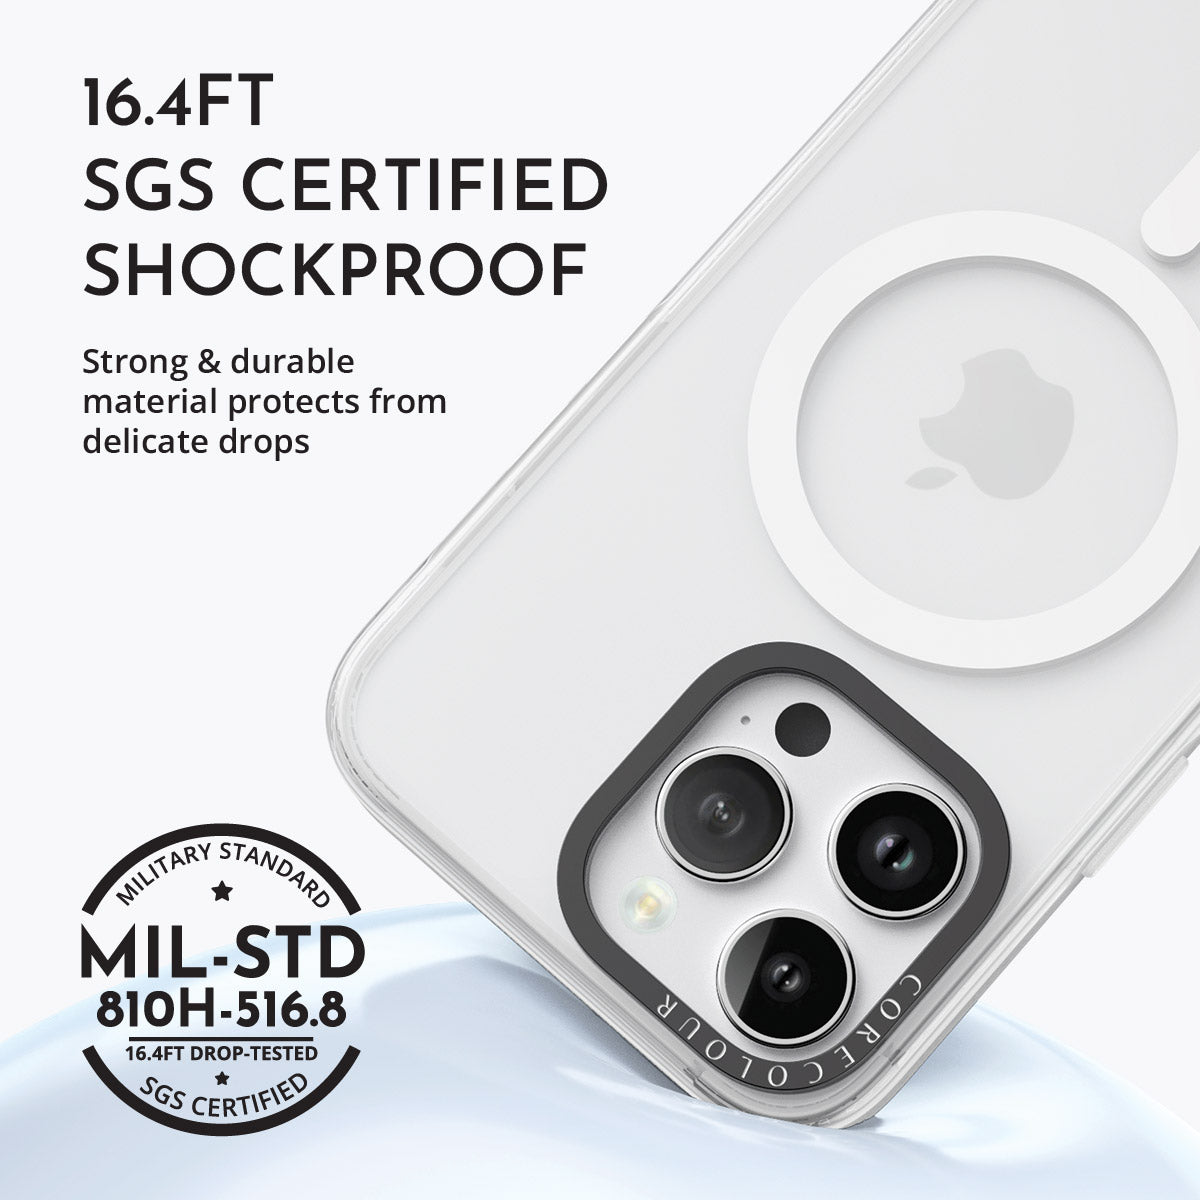 iPhone 12 Pro Melting Smile Phone Case Magsafe Compatible - CORECOLOUR